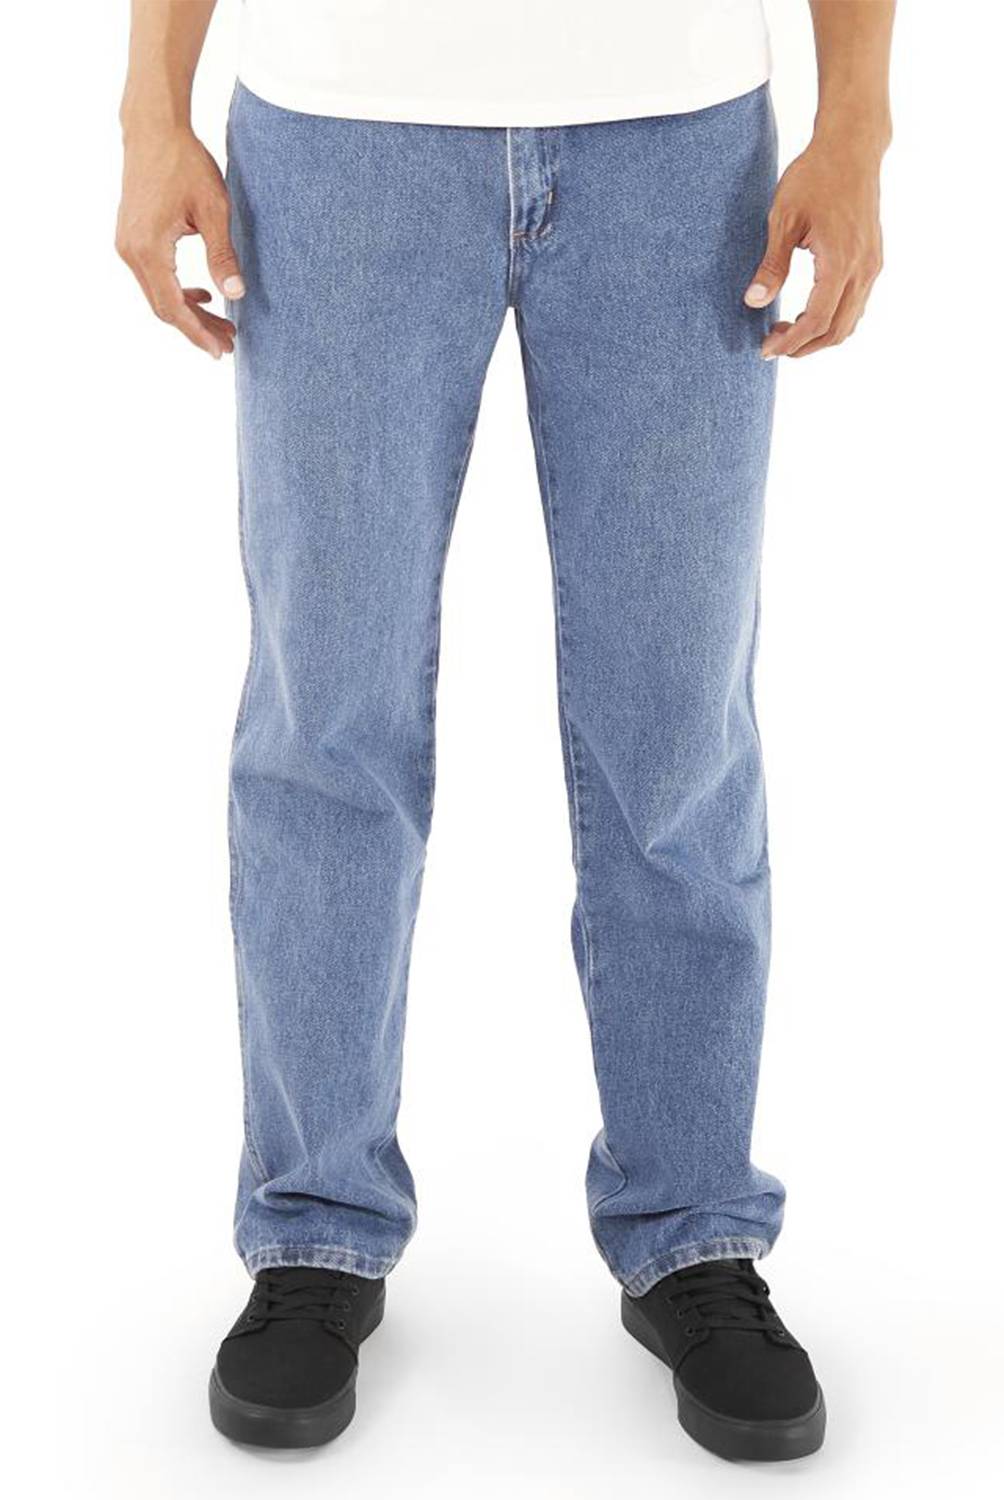 Jeans Hombre Wrangler Wholesale Online, Save 55% 